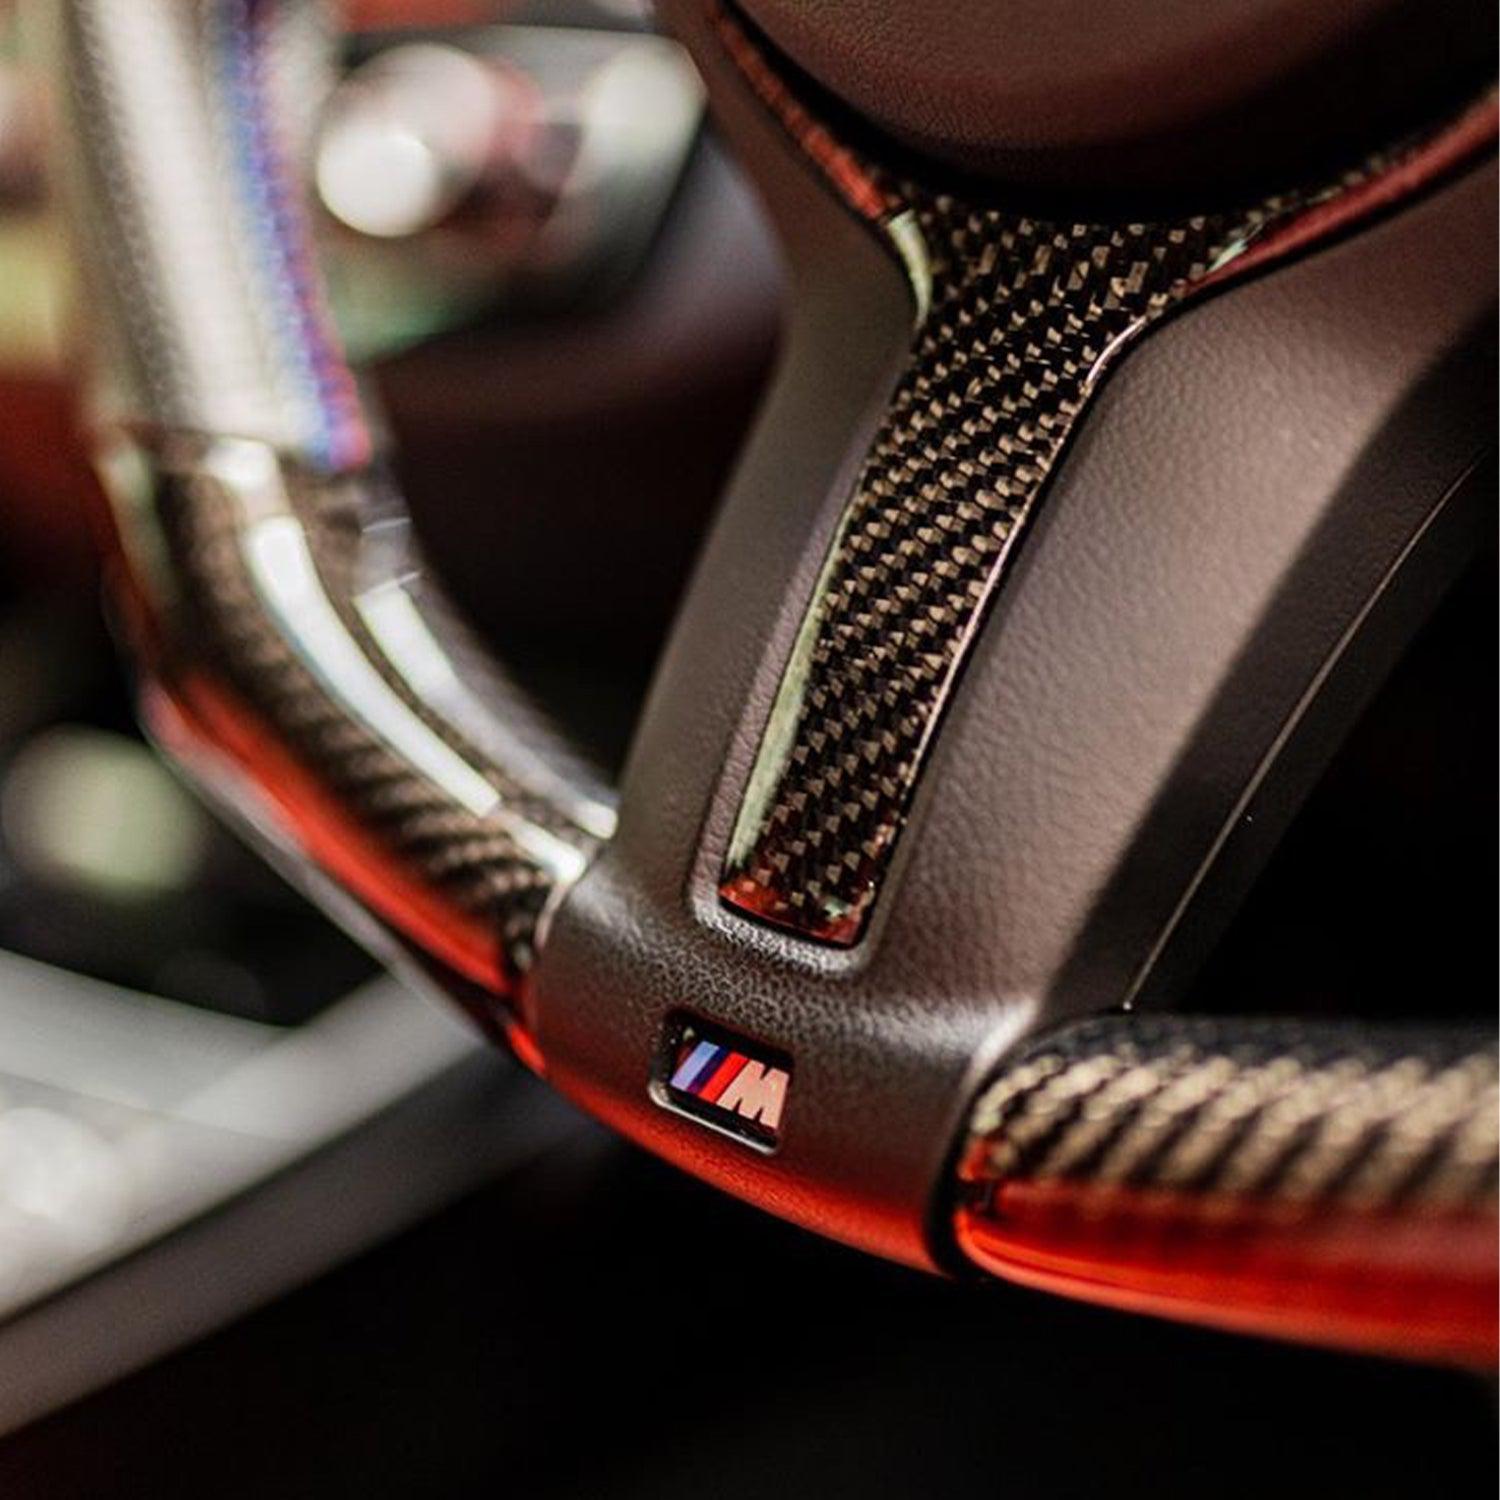 SHFT BMW M Sport Steering Wheel Trim Insert In Gloss Carbon Fibre-R44 Performance